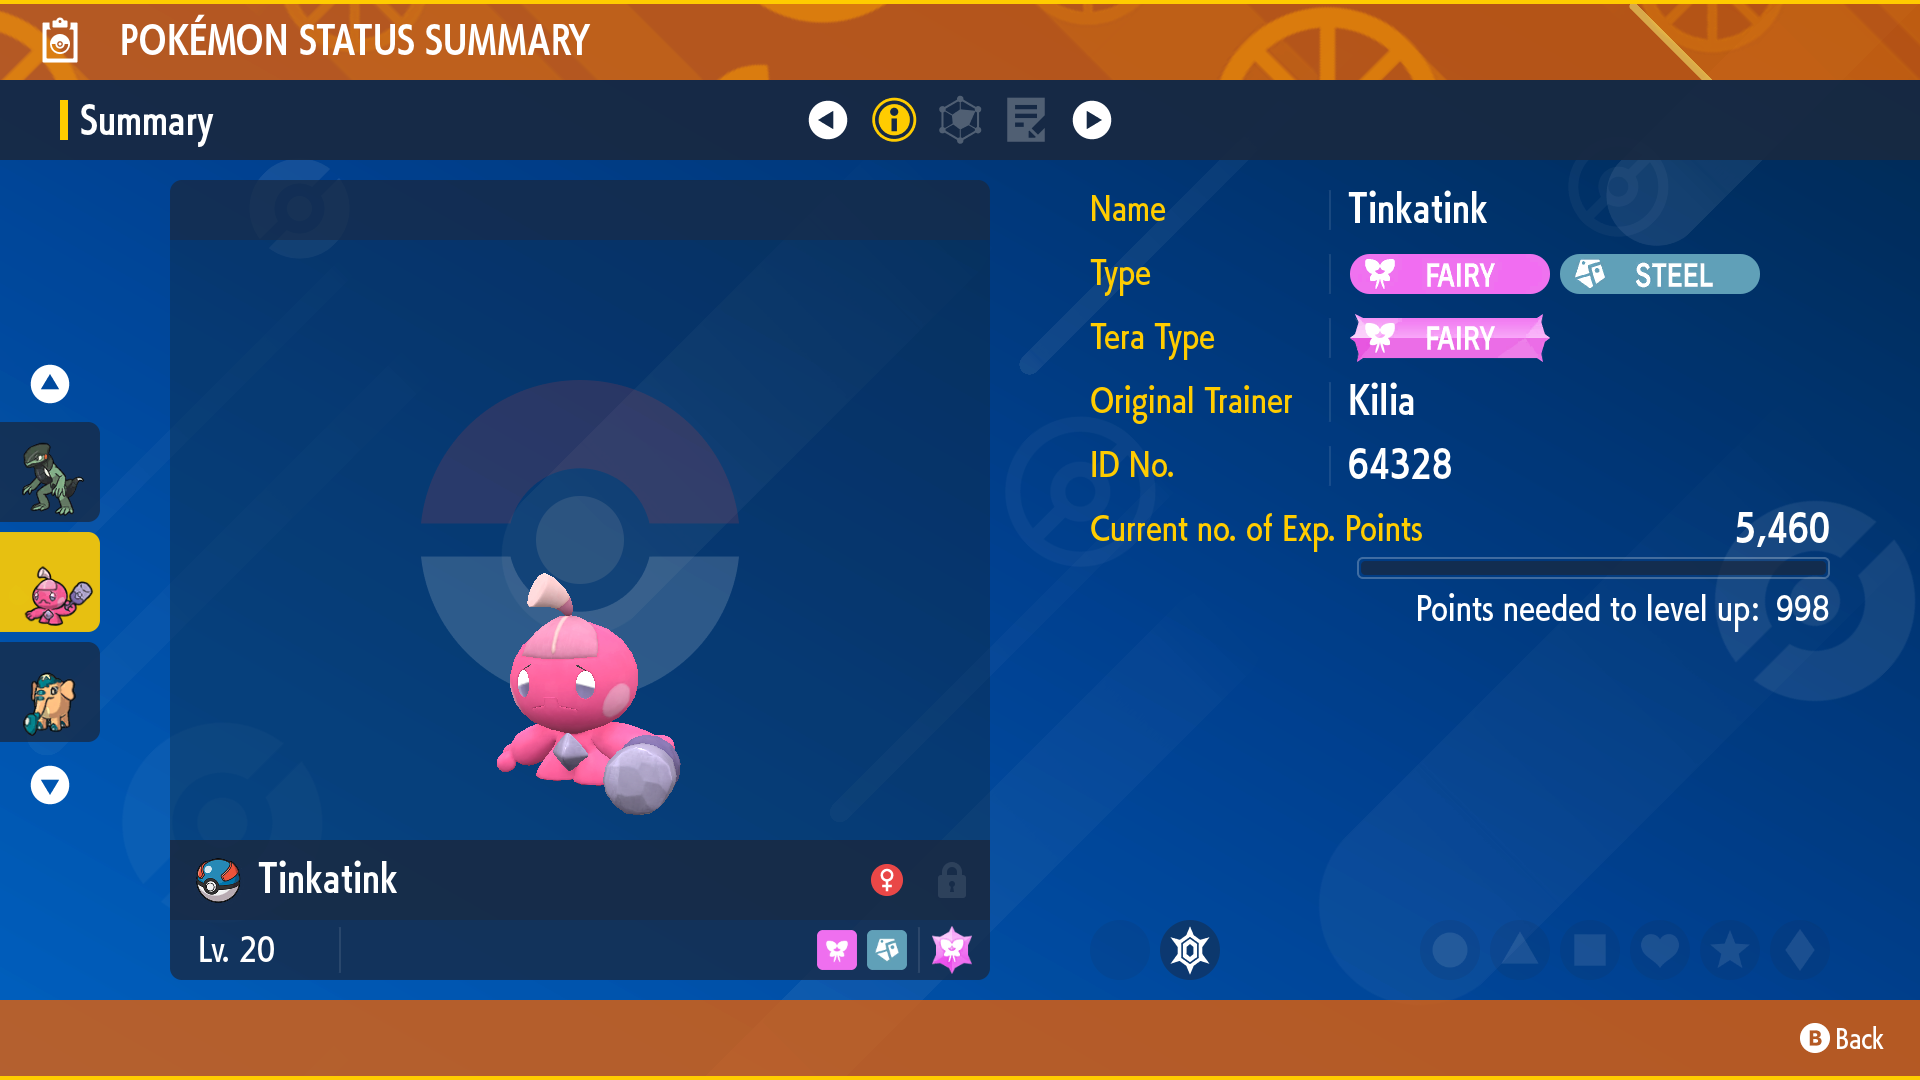 Tinkatink is a Fairly/Steel Pokemon. 